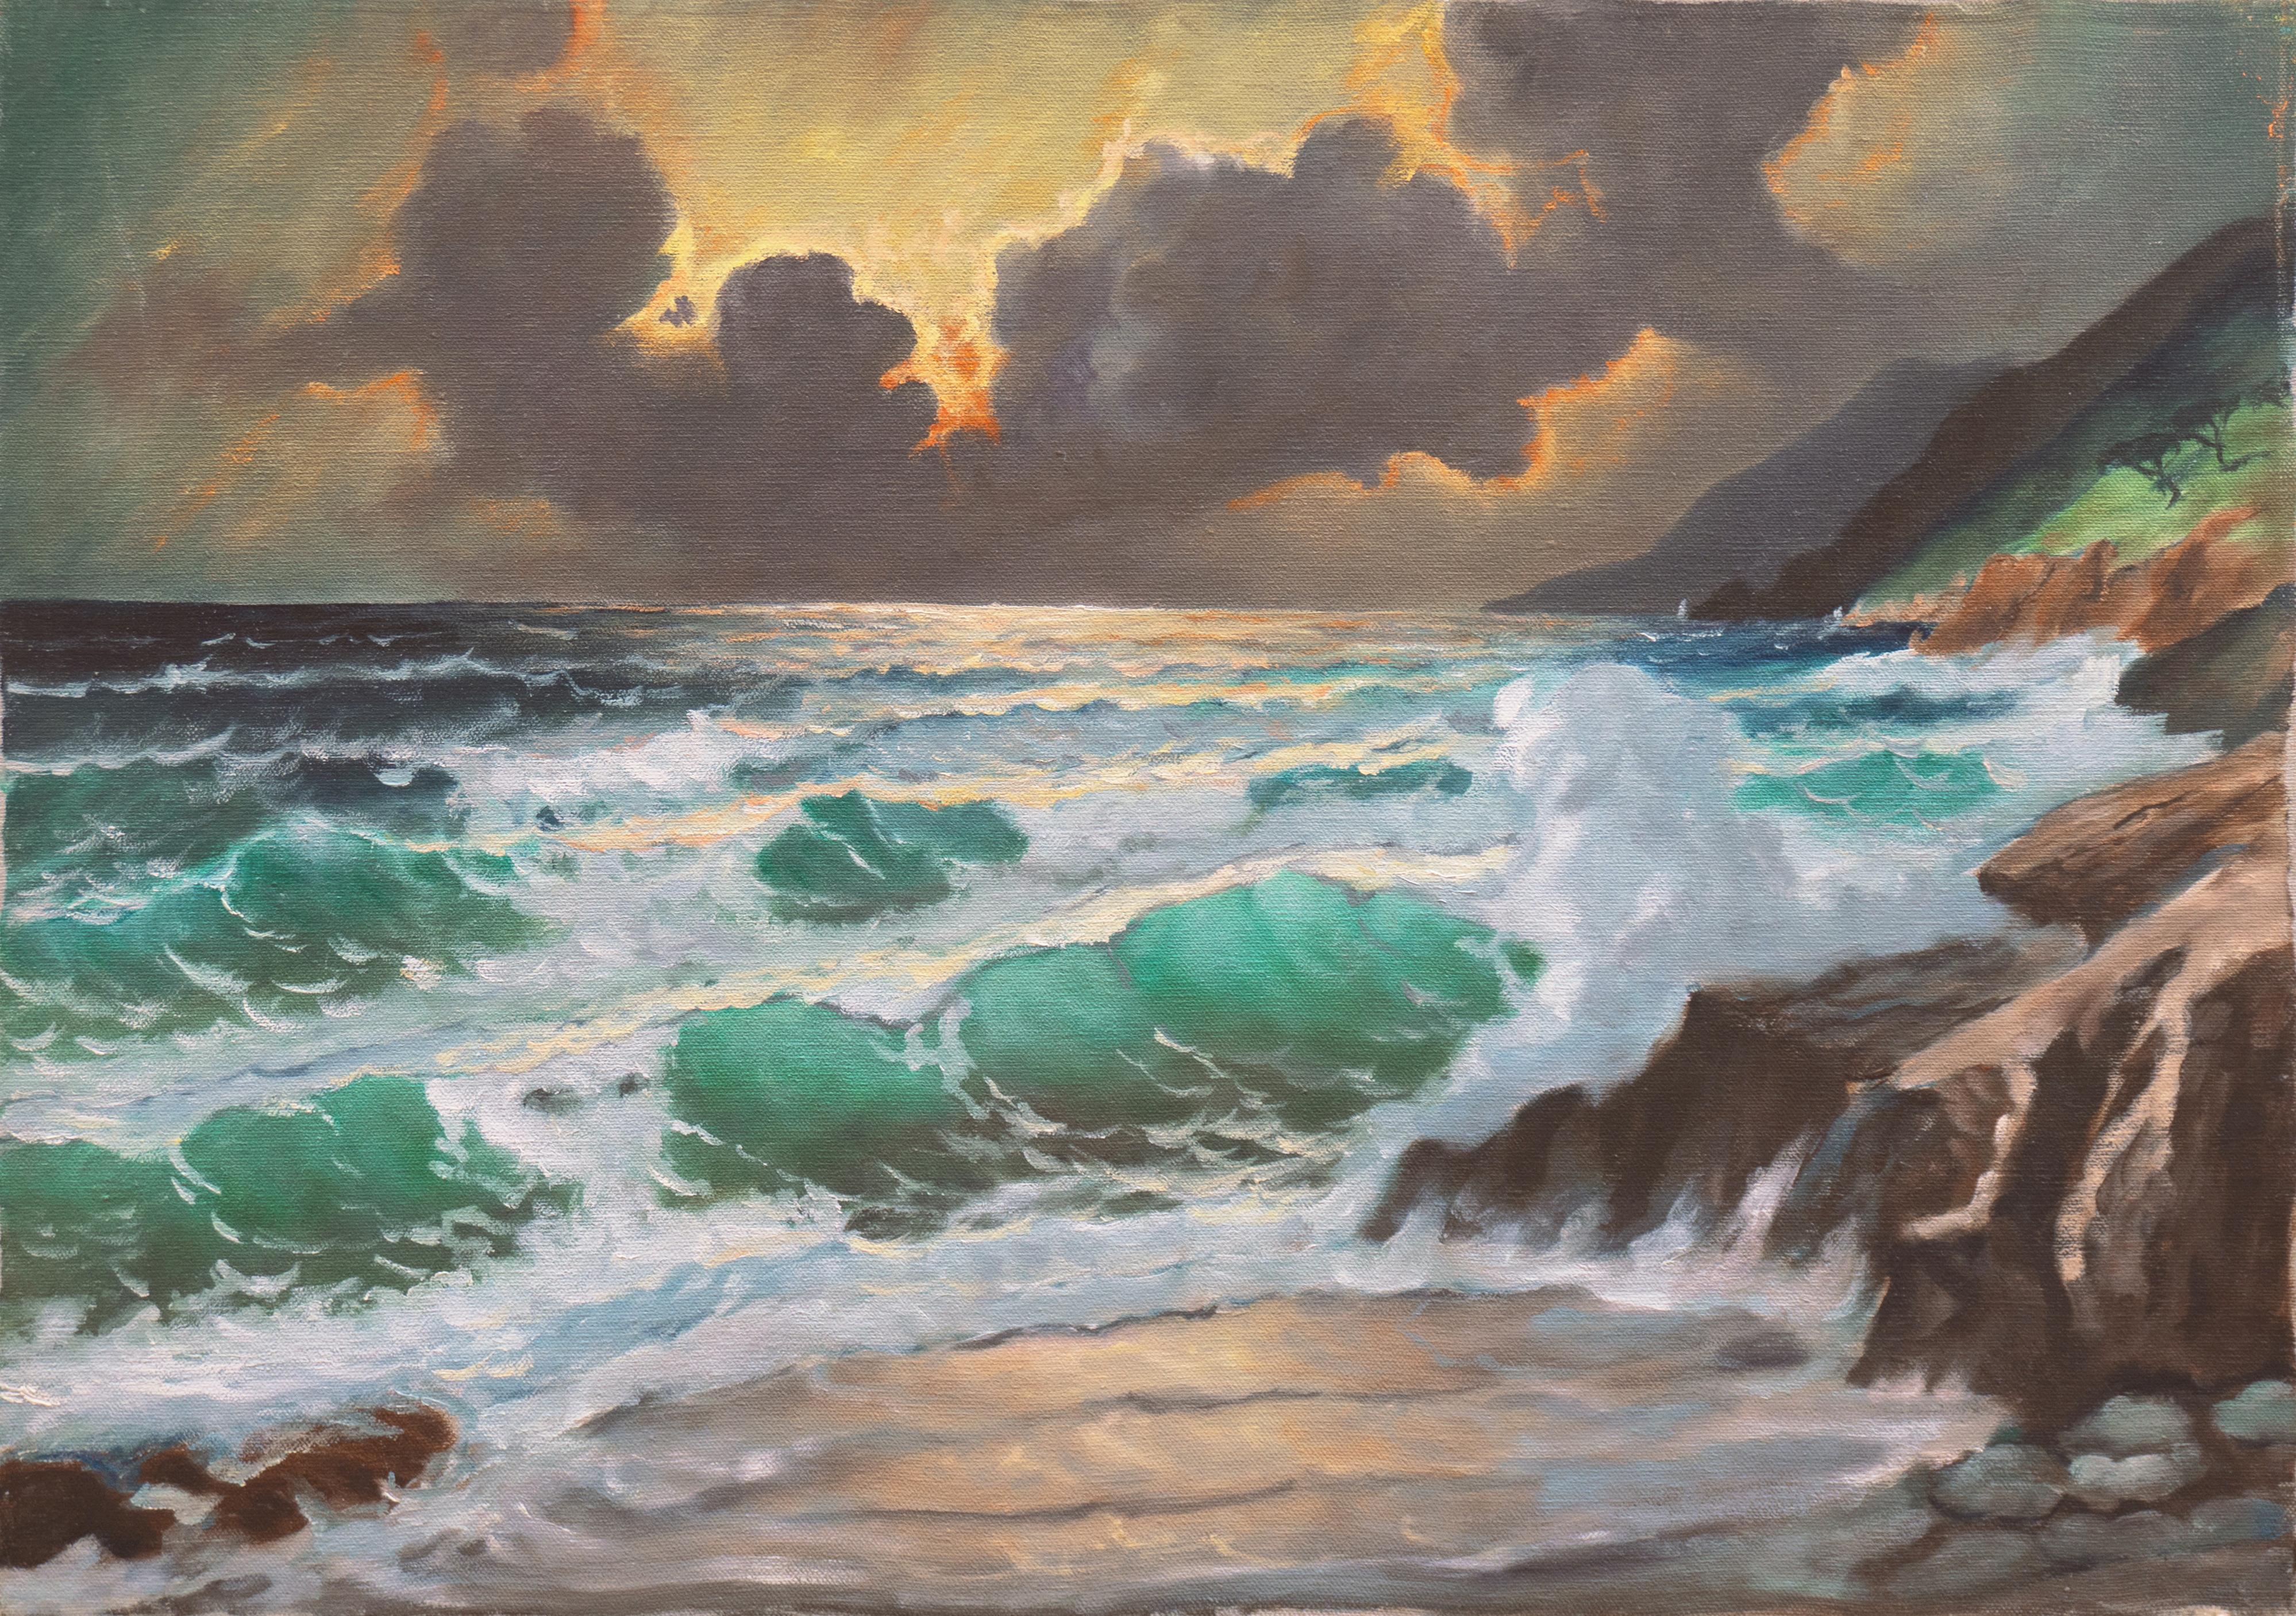 20th century American School Landscape Painting - 'Sunset Breakers, Rocky Coast'. Pacific Ocean Beach, Seascape, Cypress Trees 